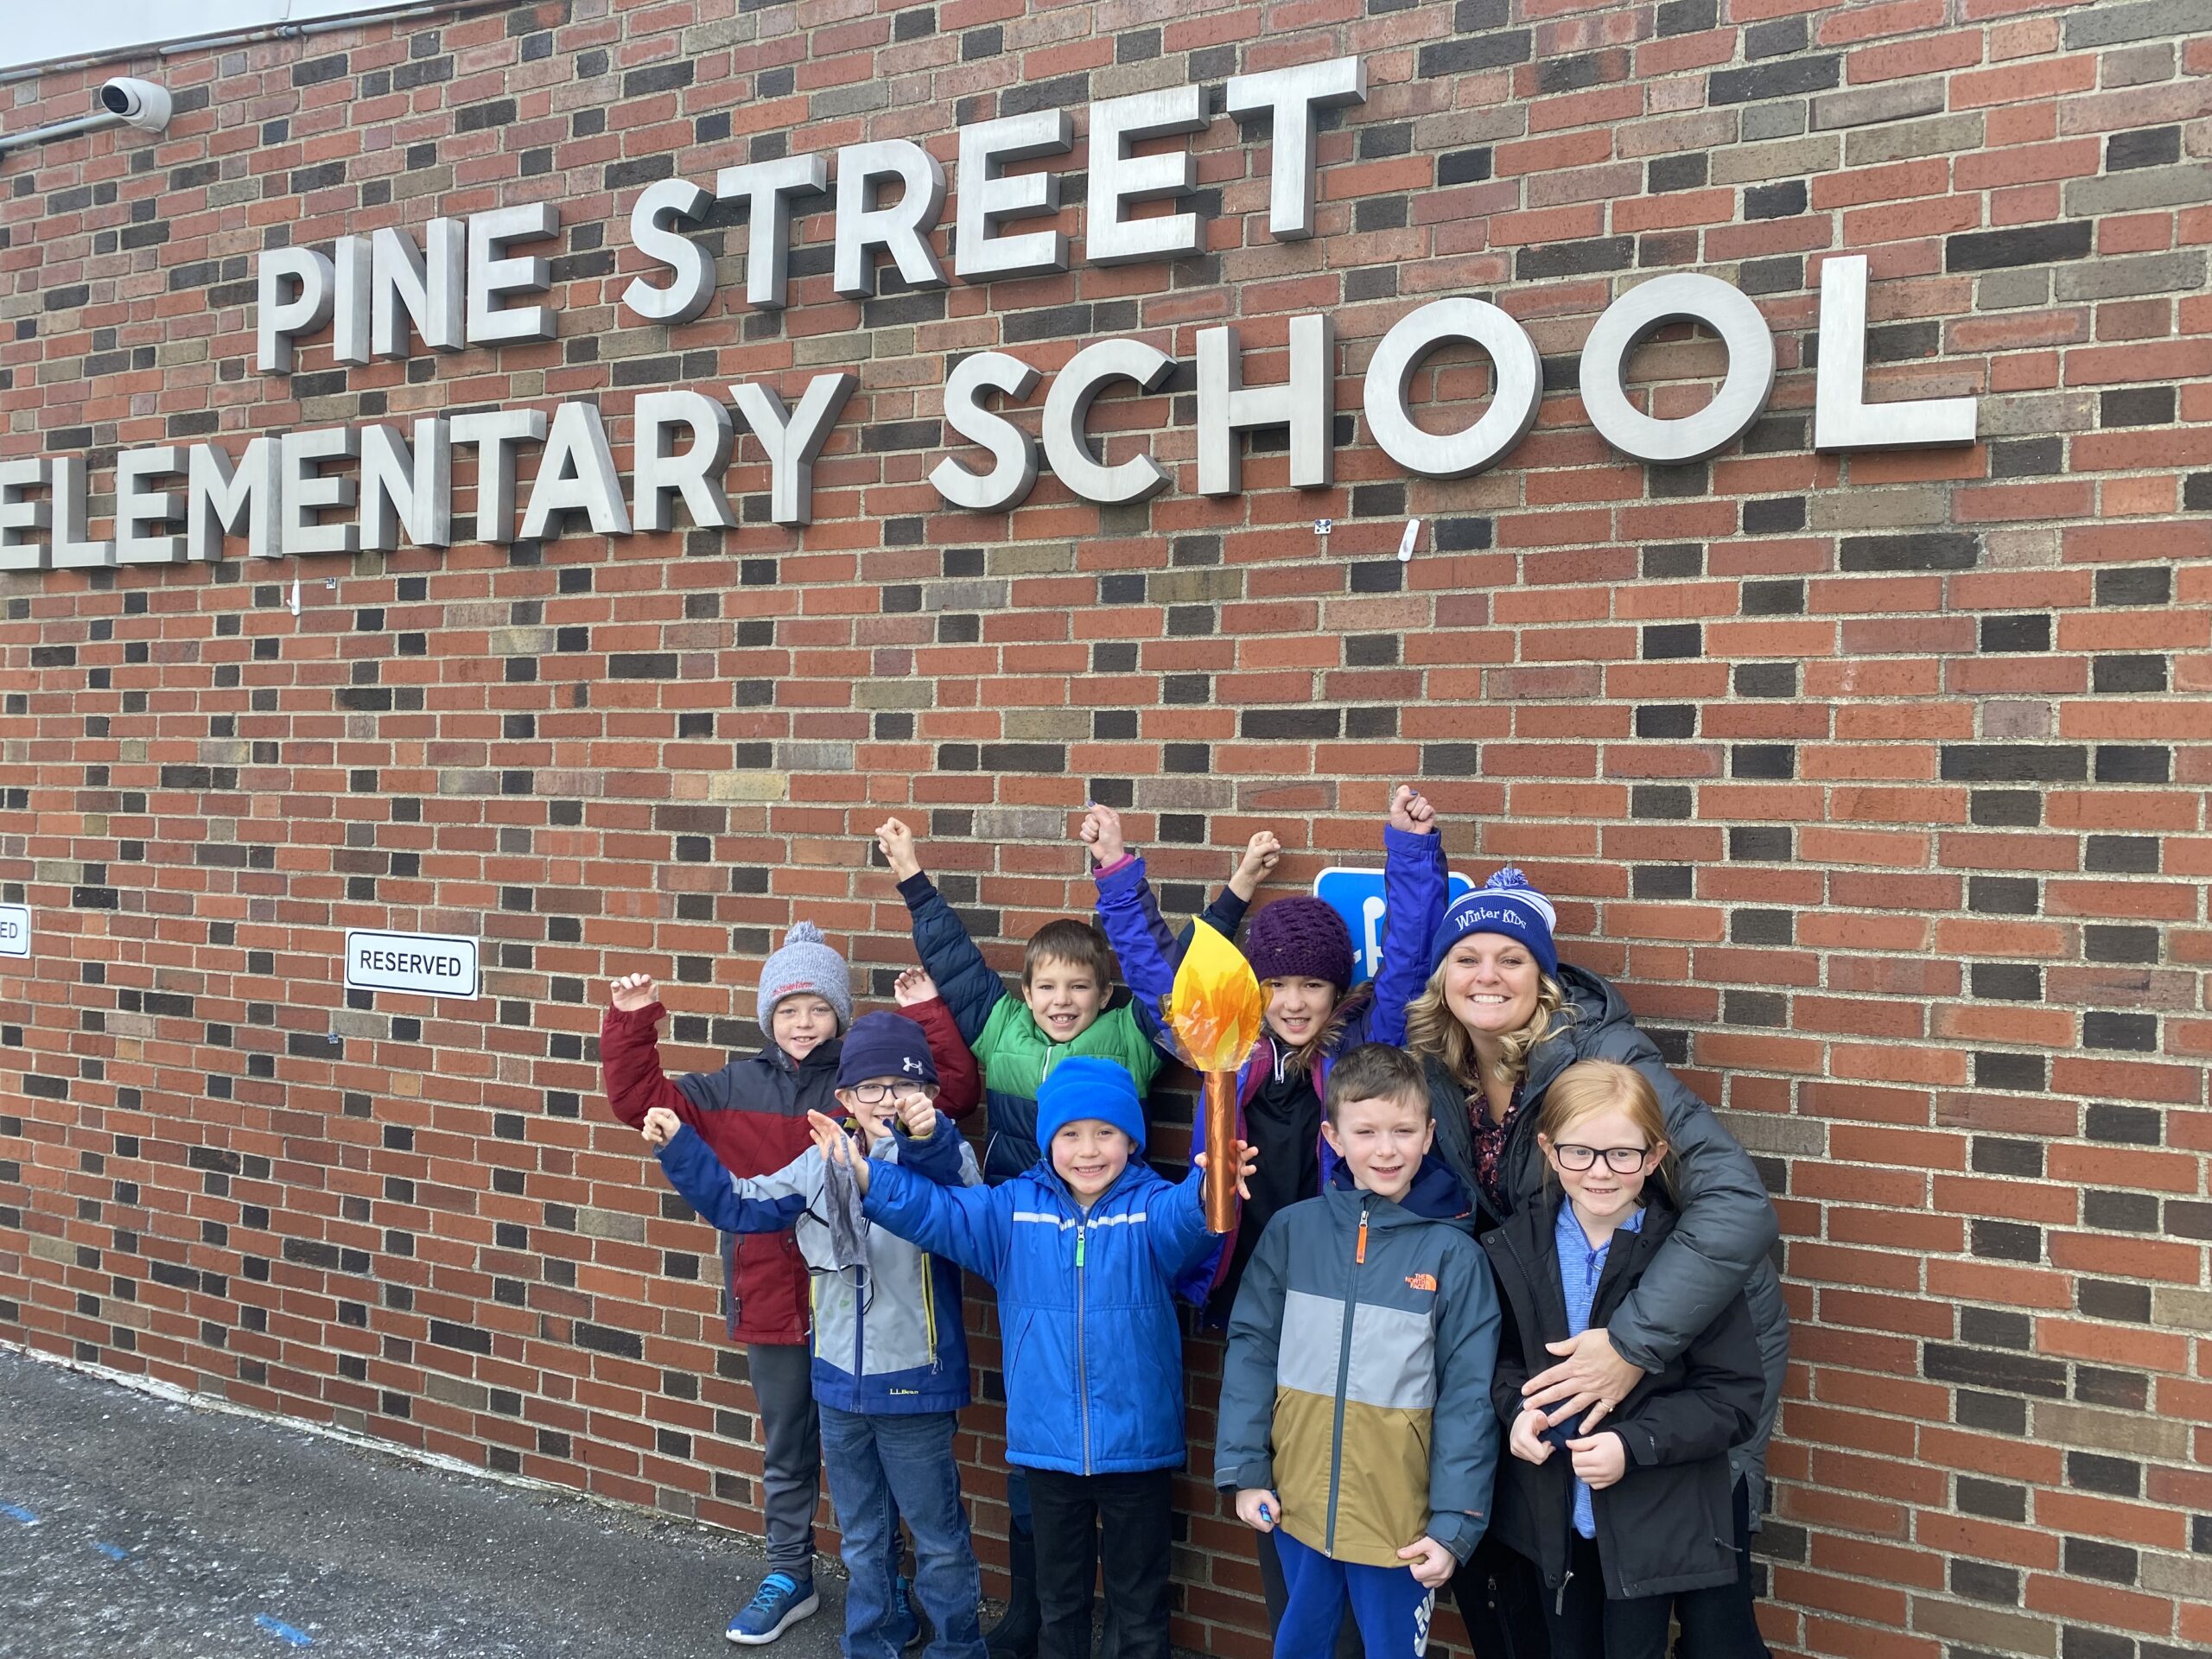 Pine Street Elementary